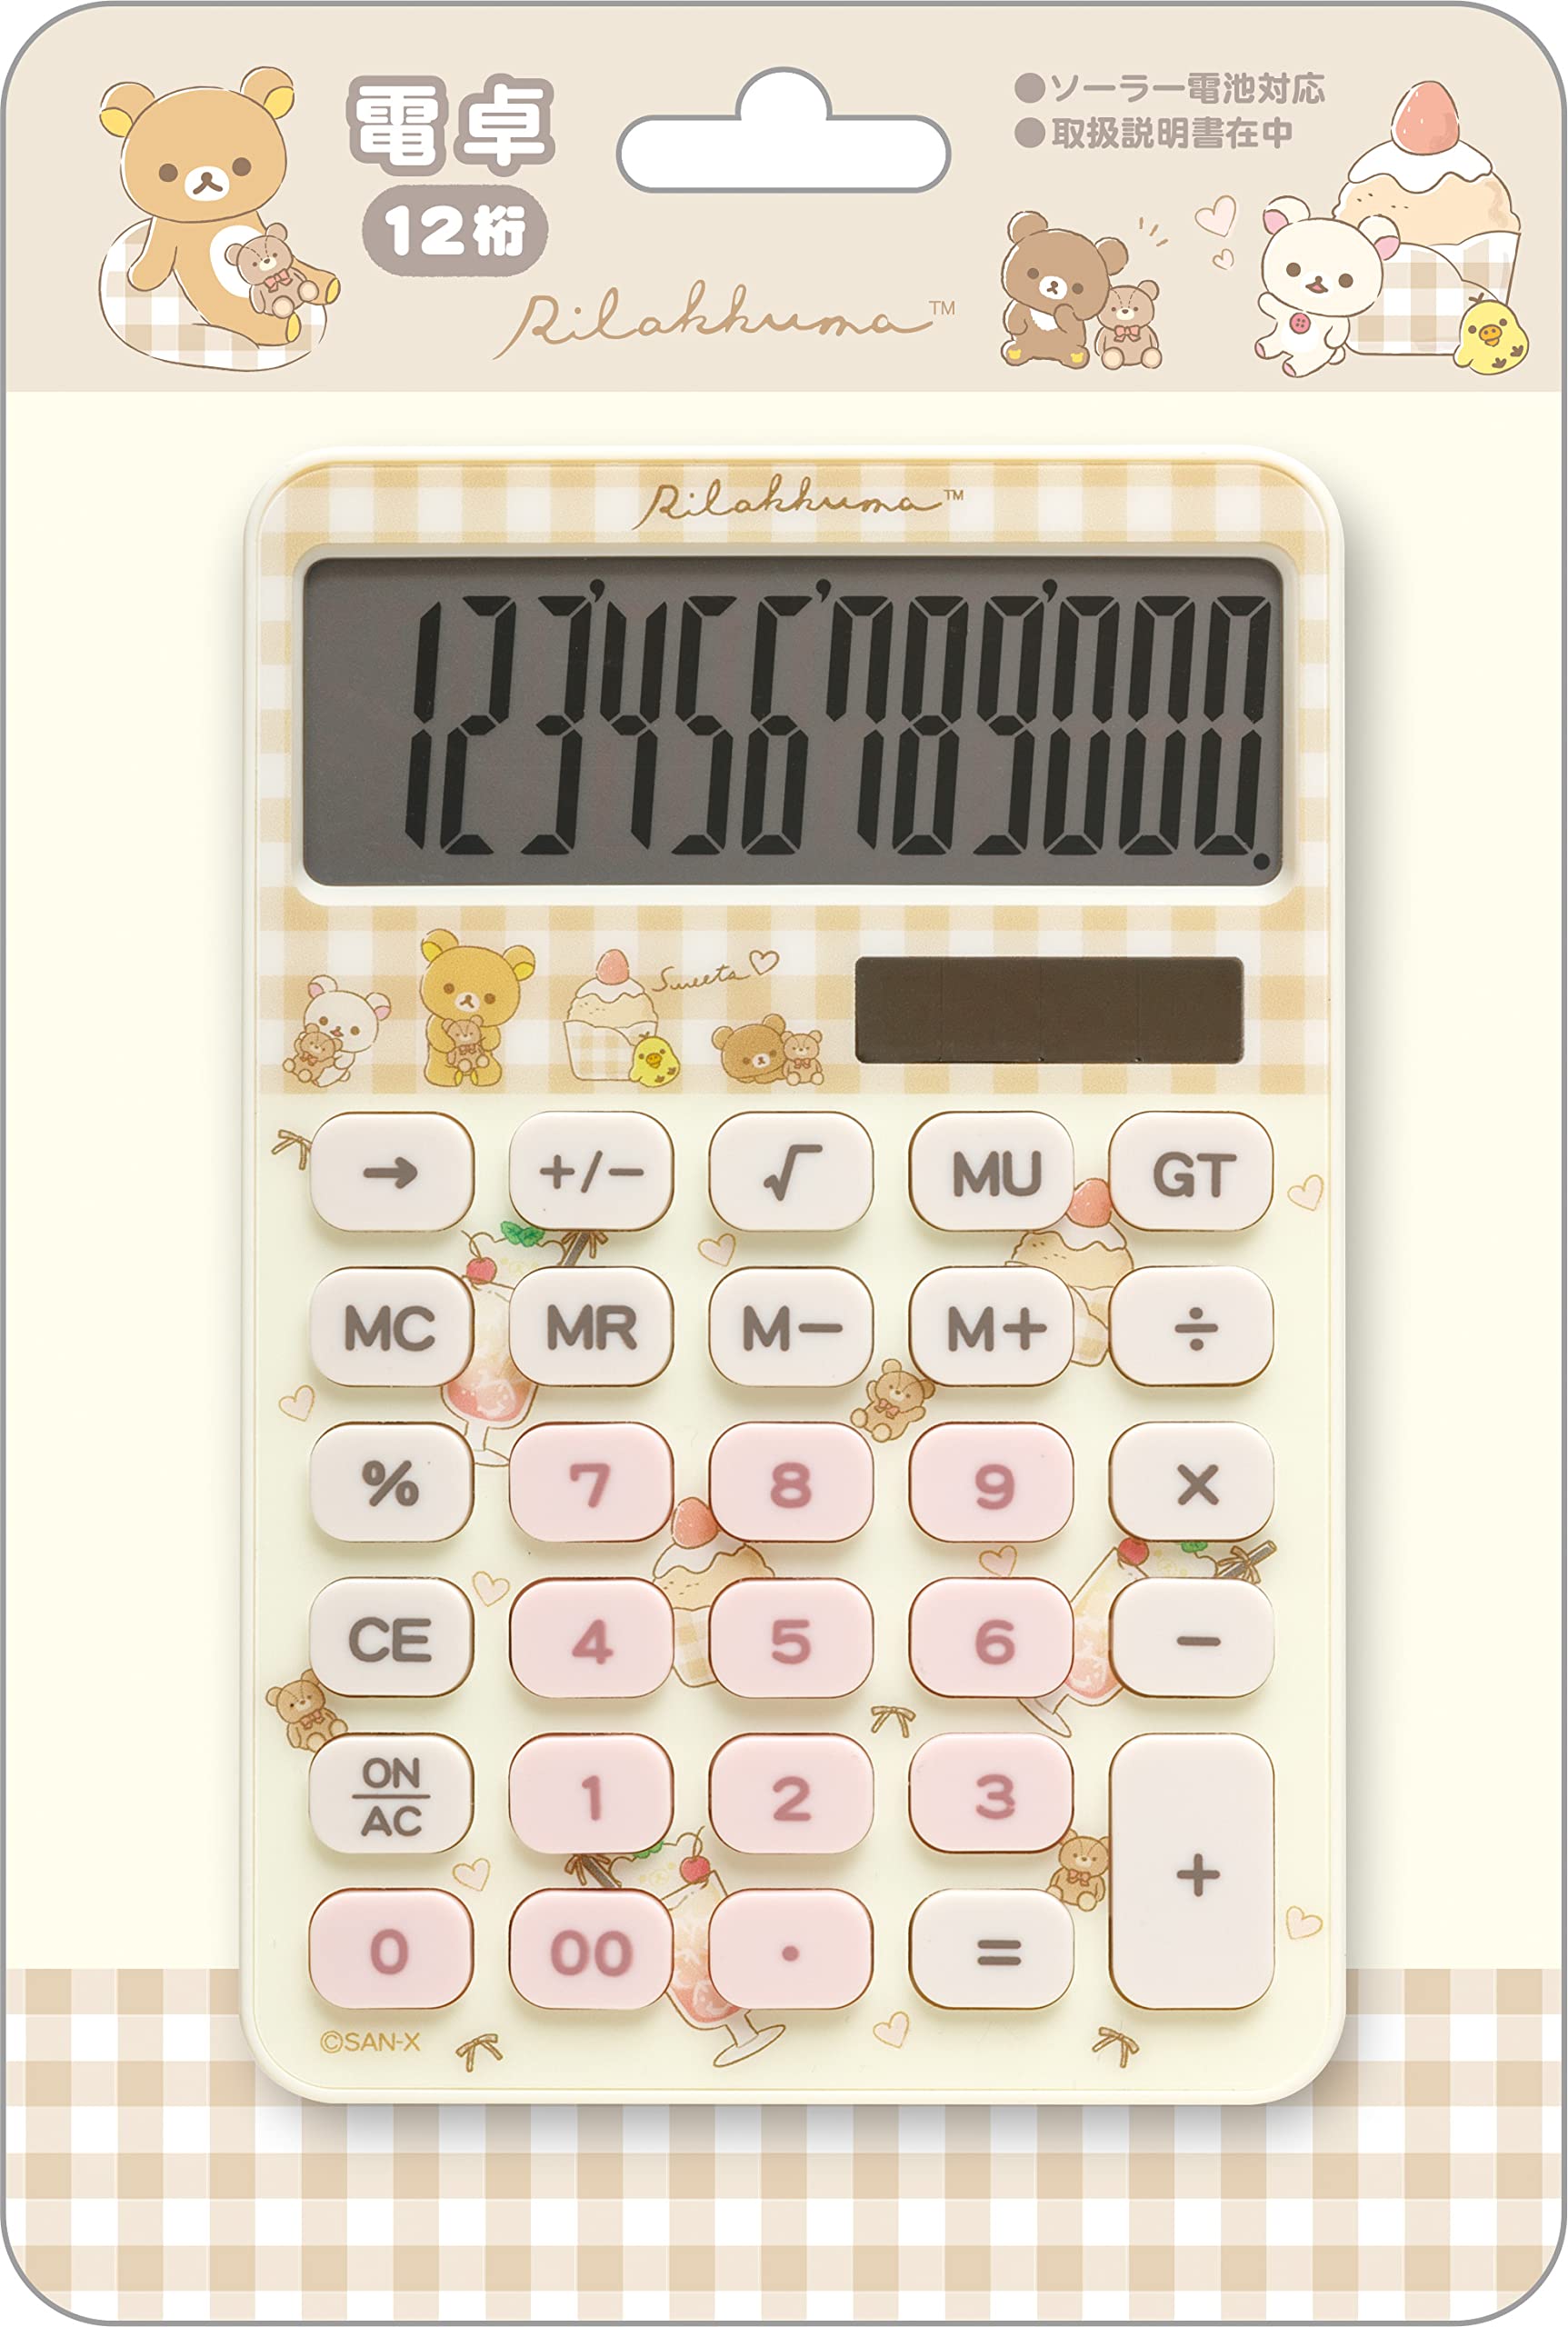 San-x EM32602 Rilakkuma Calculator